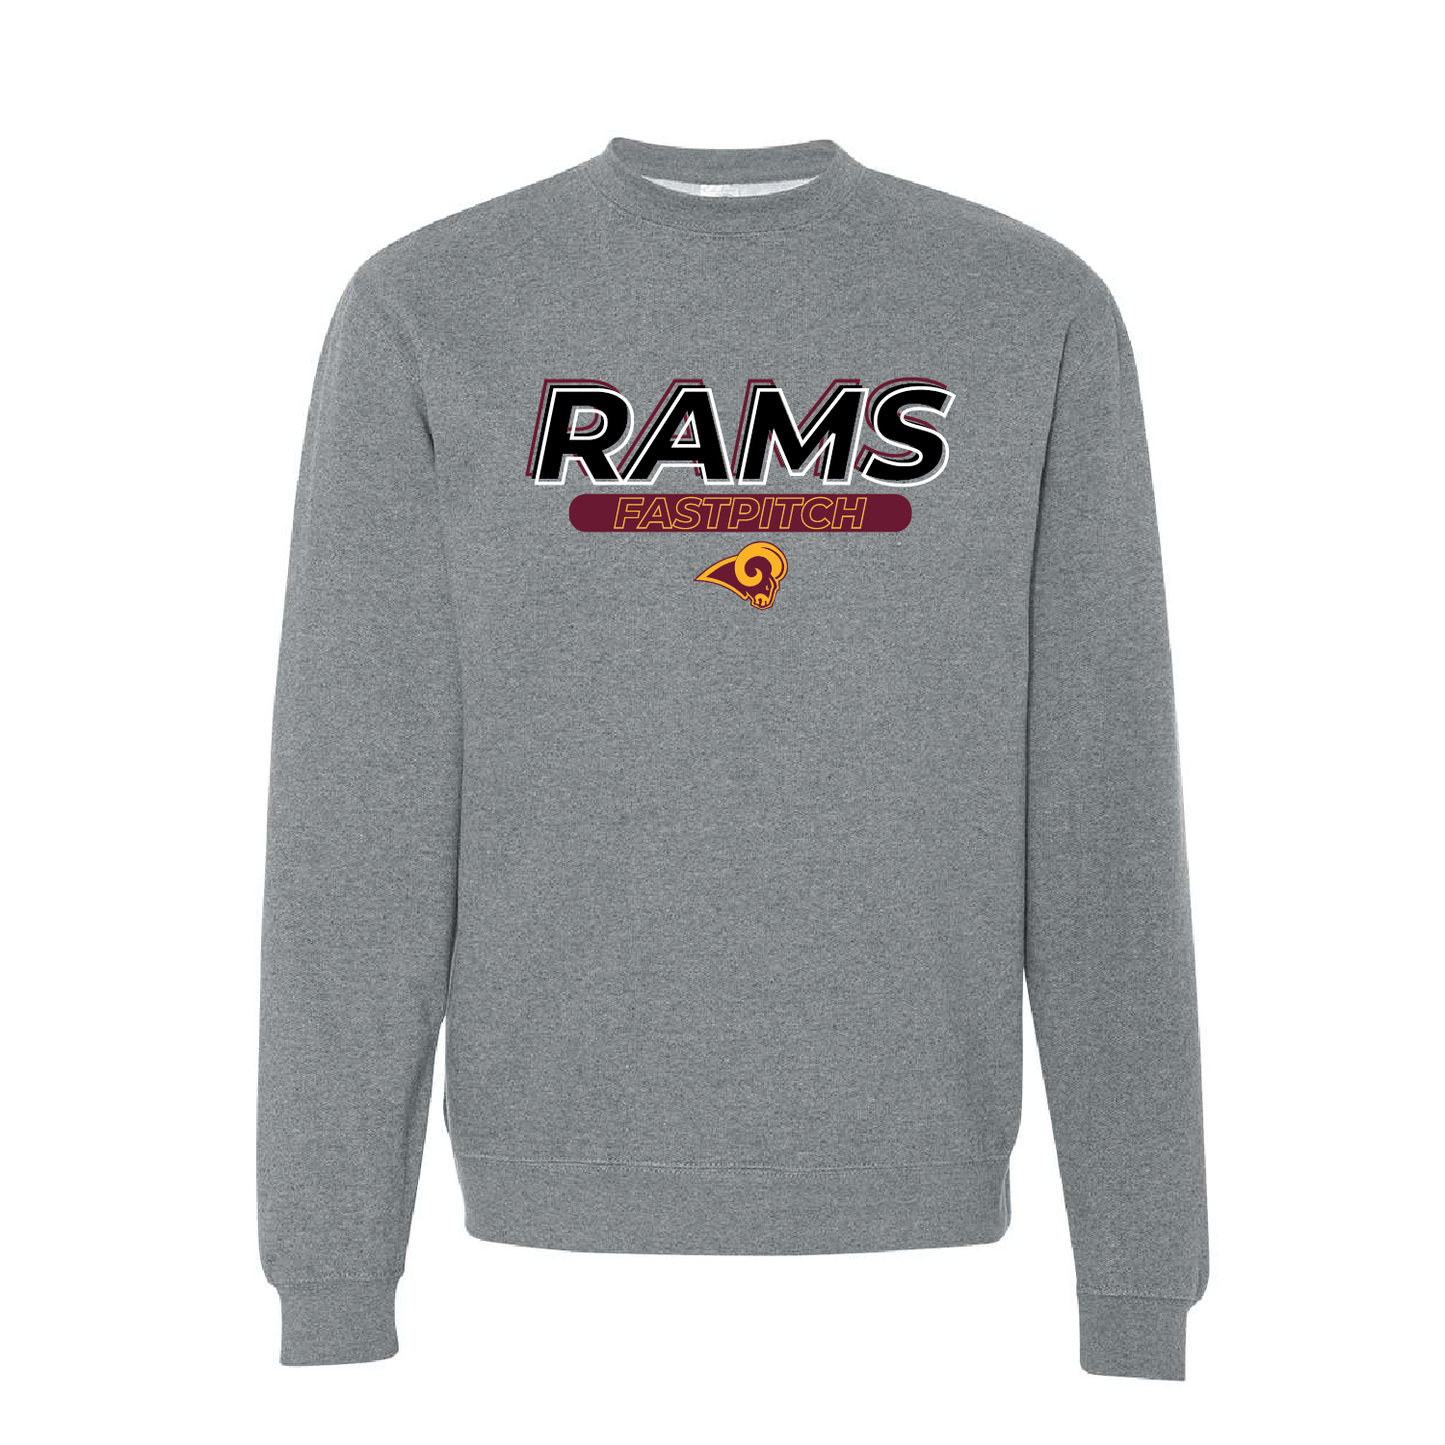 Rams Fastpitch Unisex Crewneck Sweatshirt